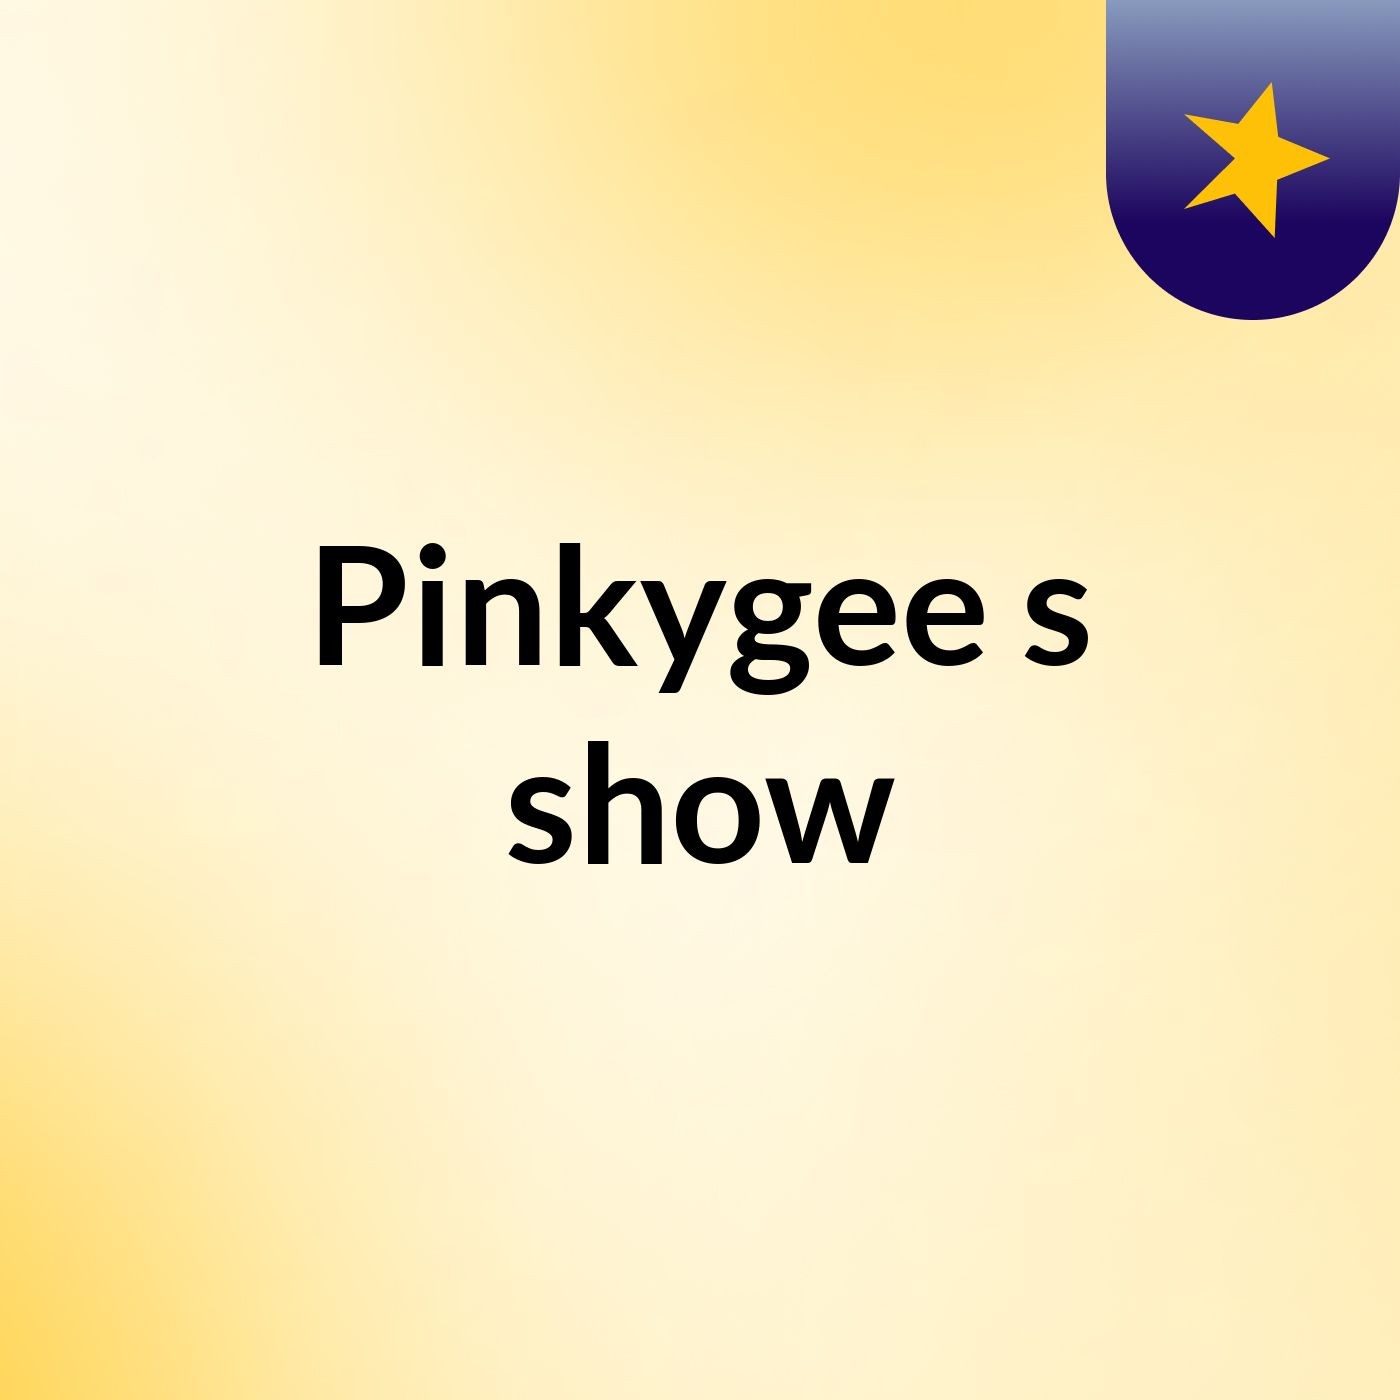 Pinkygee's show